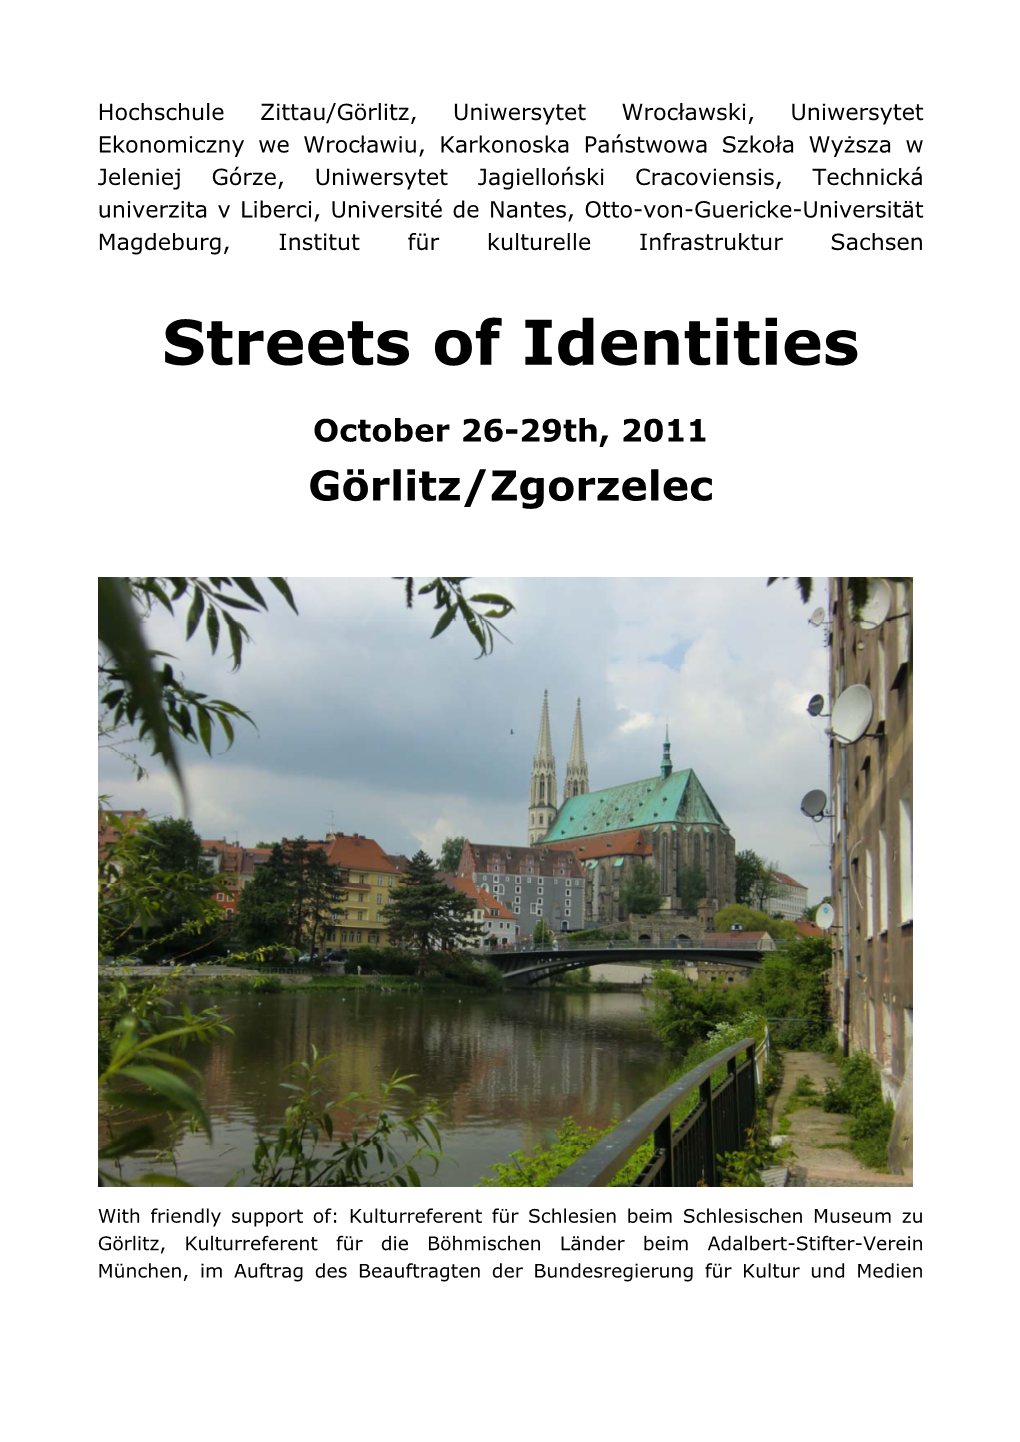 Streets of Identities